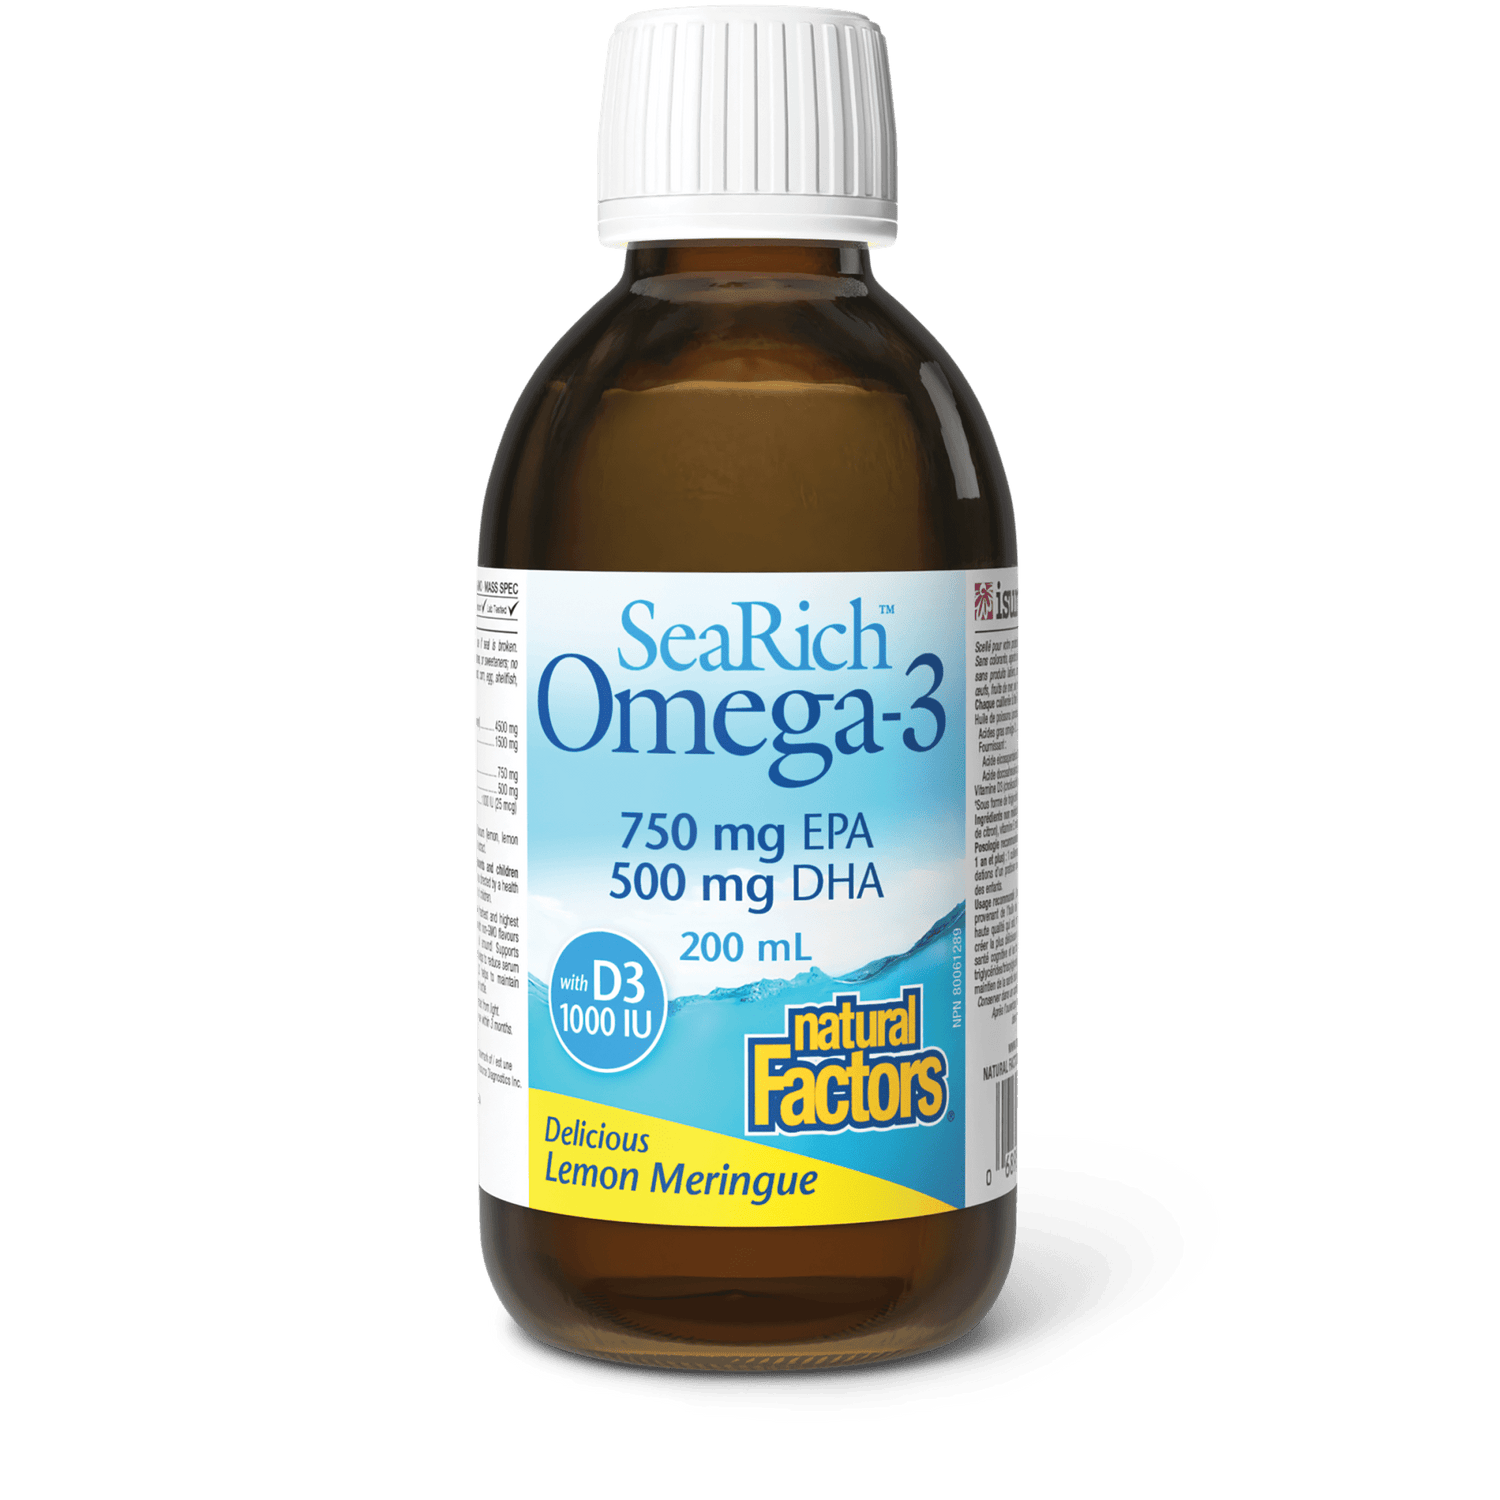 Omega-3 with D3 750 mg EPA/500 mg DHA, Lemon Meringue, SeaRich, Natural Factors|v|image|35745